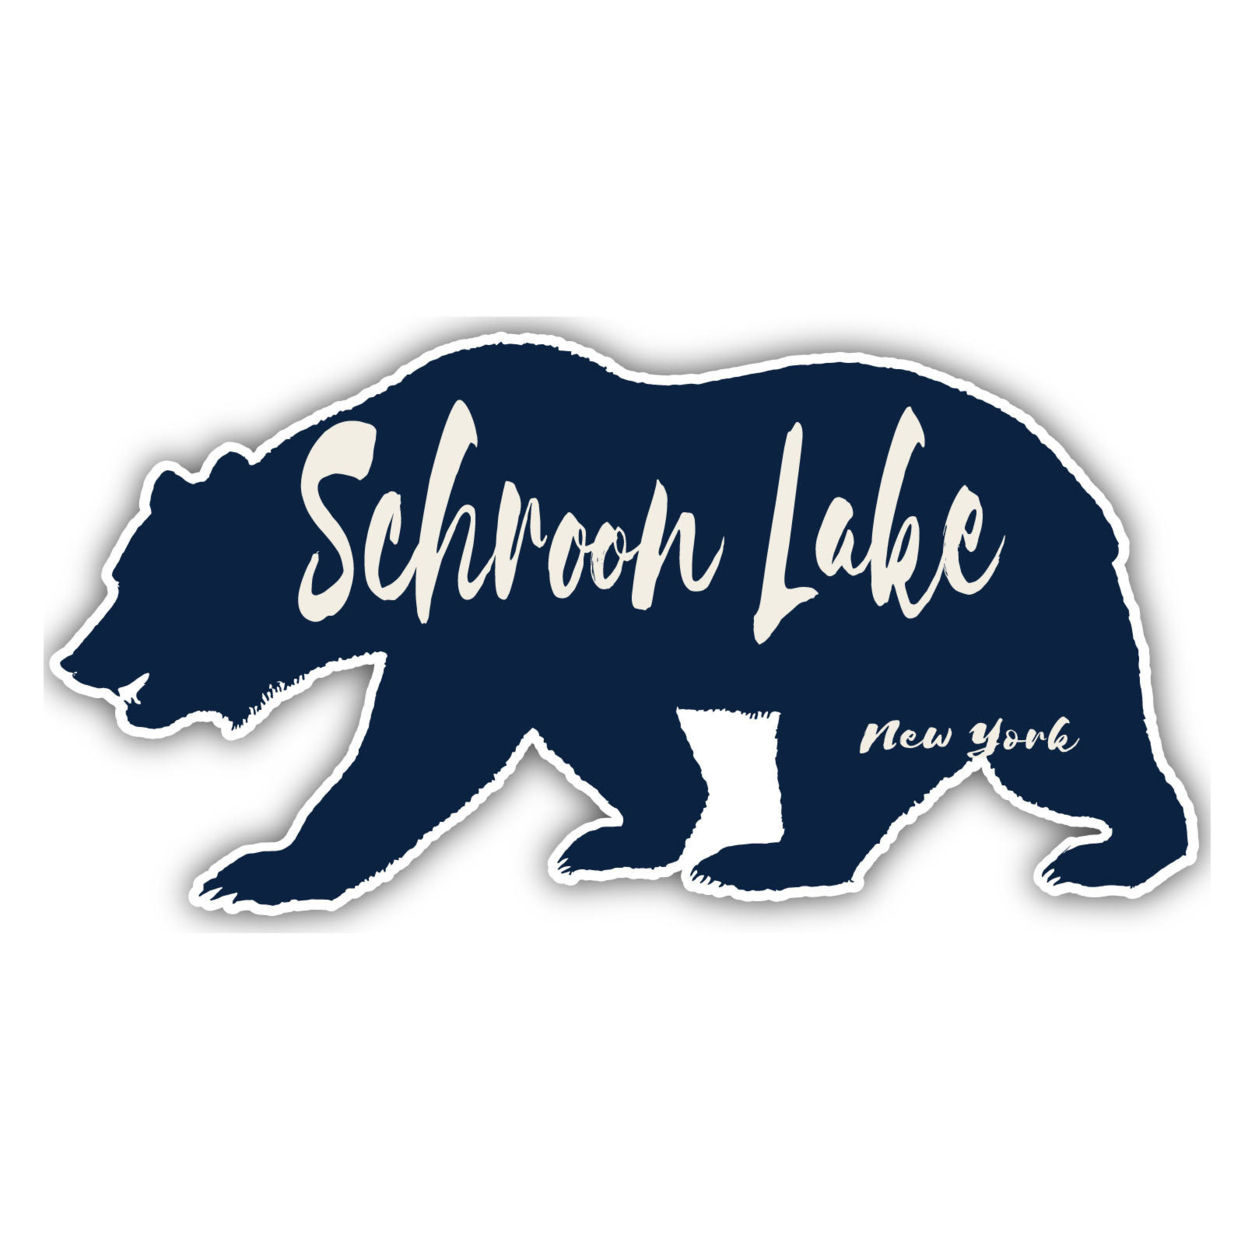 Schroon Lake New York Souvenir Decorative Stickers (Choose Theme And Size) - Single Unit, 4-Inch, Bear